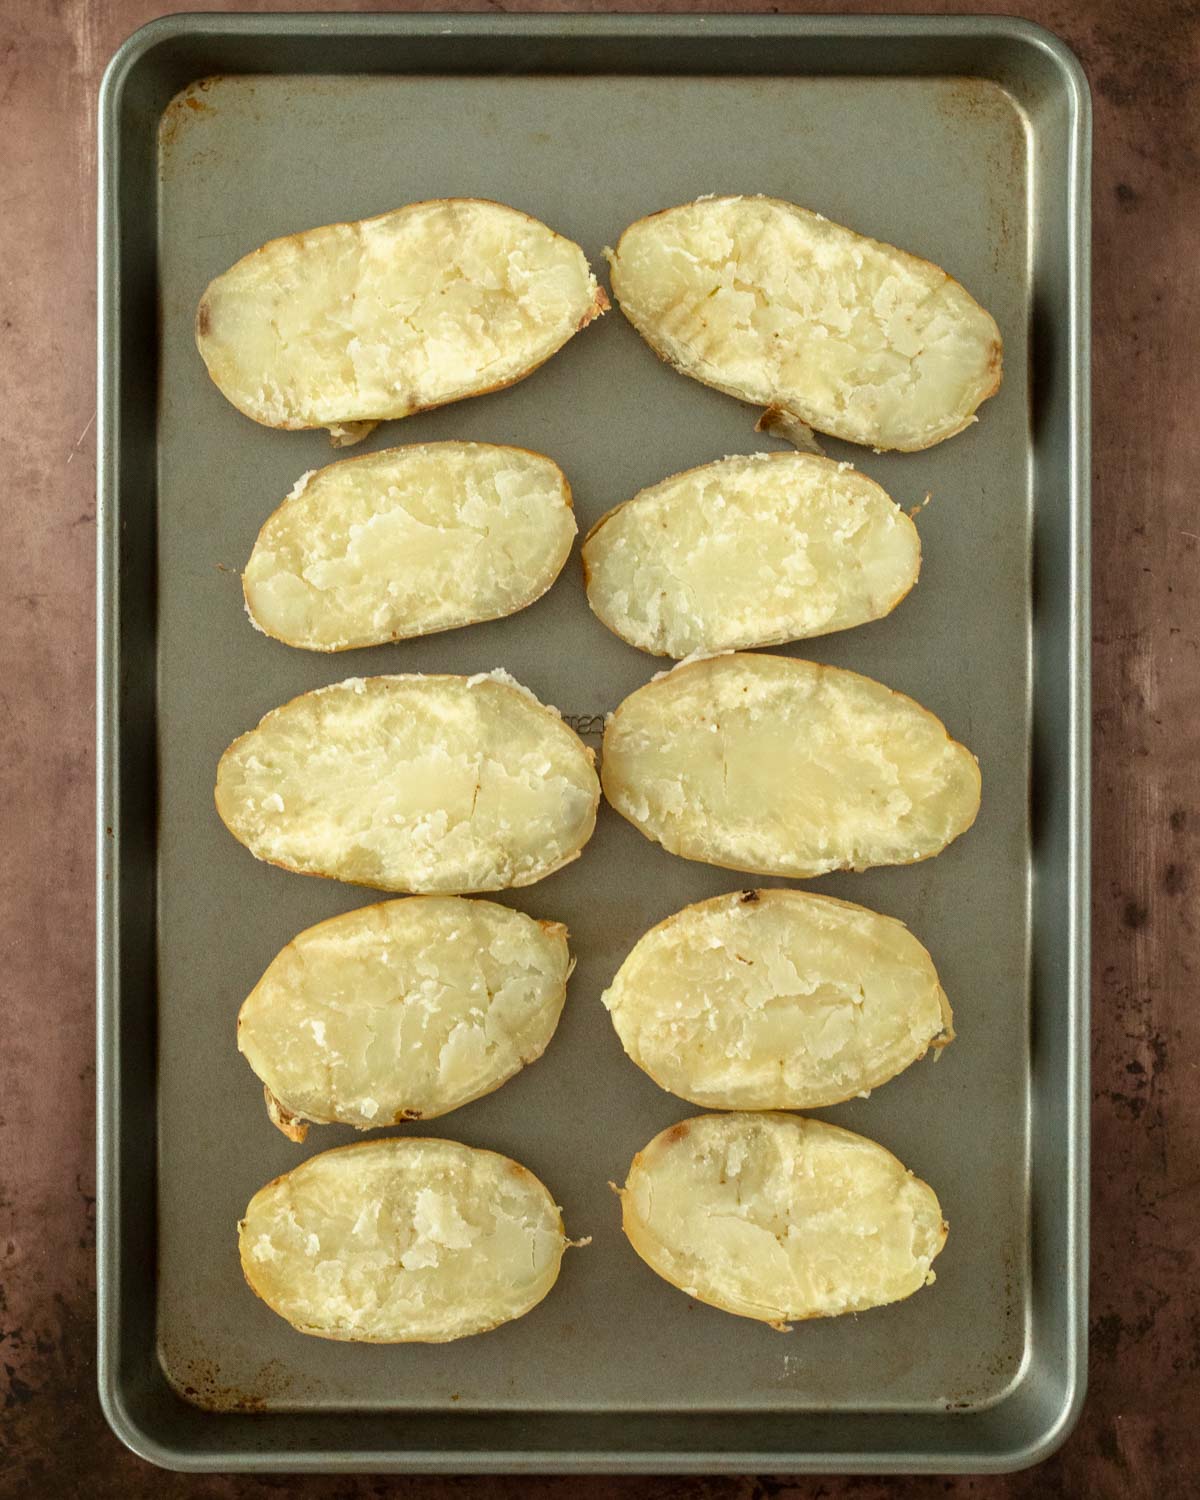 Step 2. Remove foil and cut each potato in half